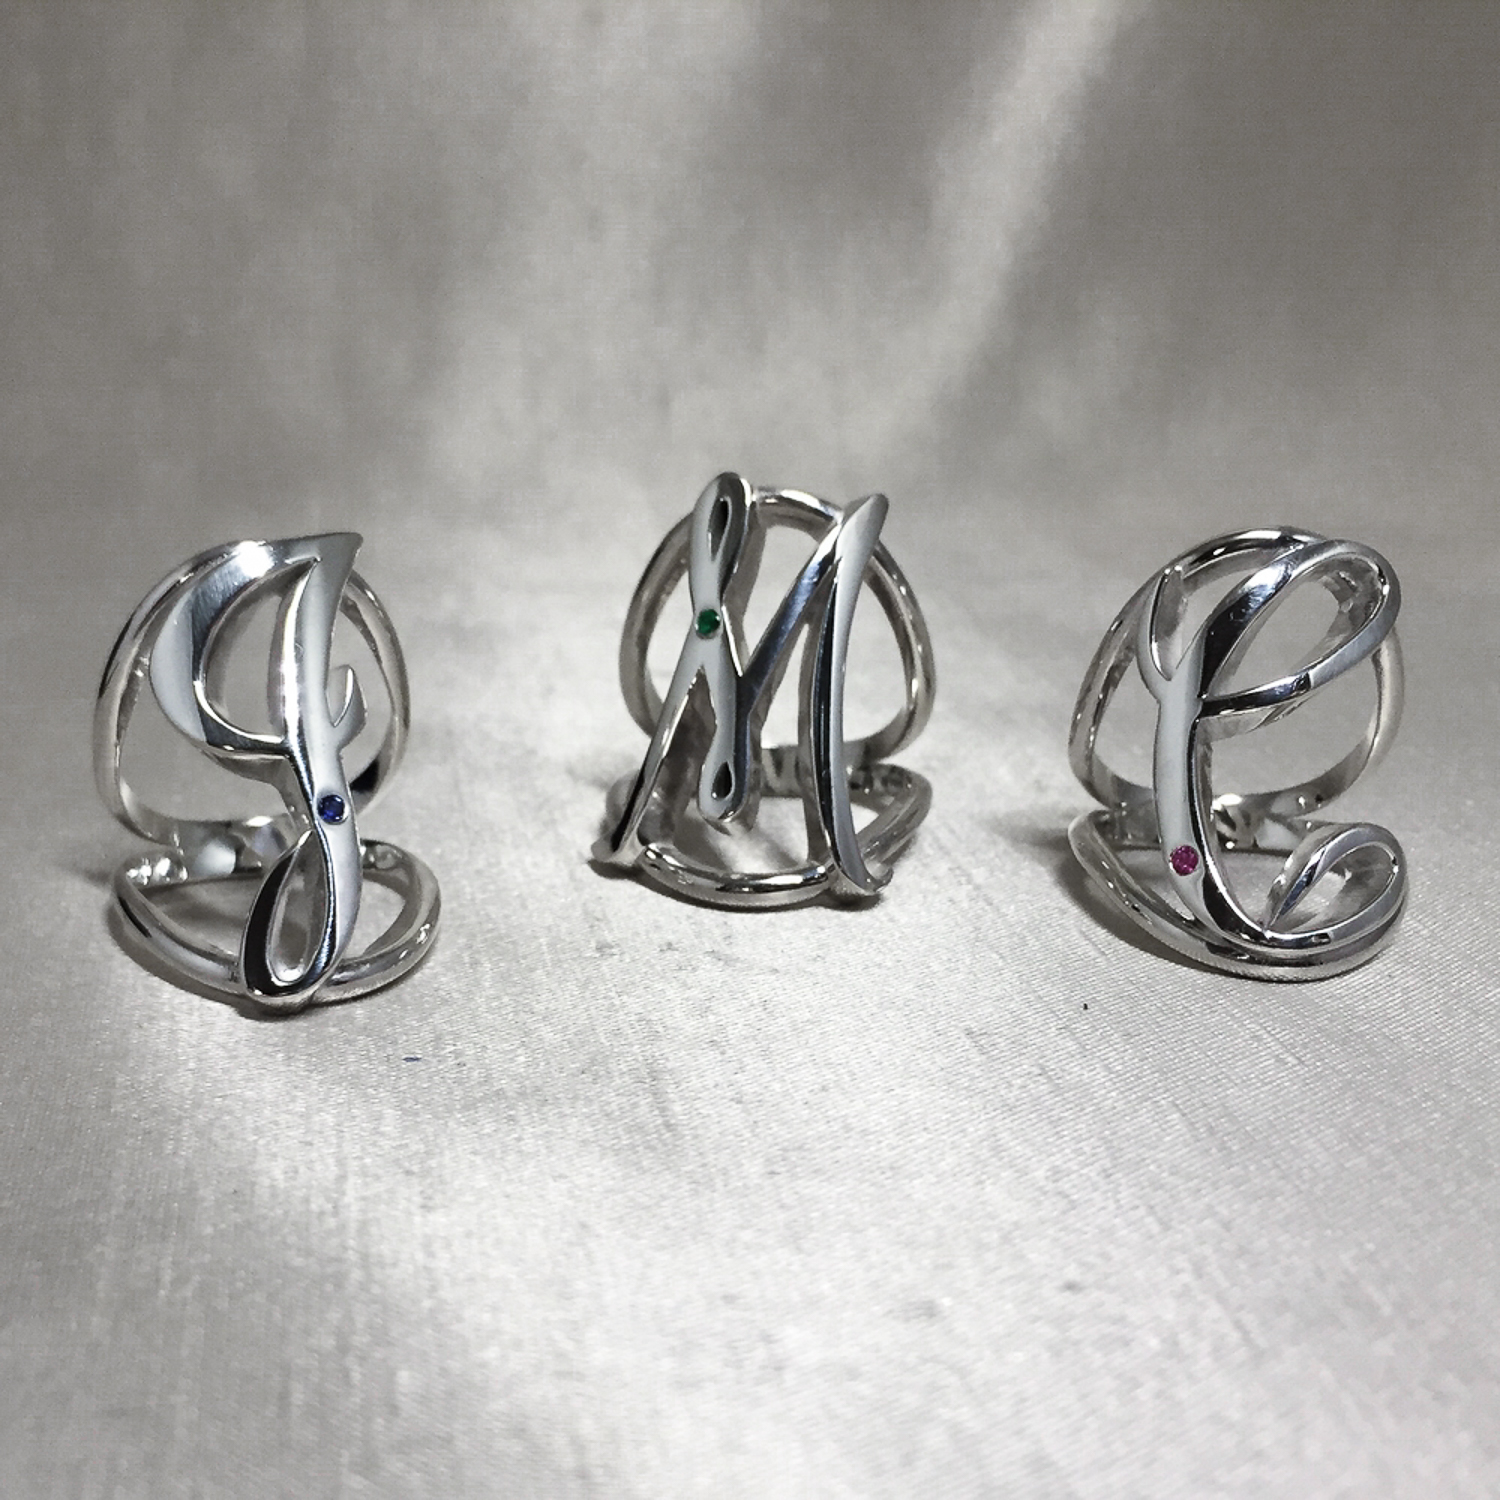   Custom Initial Rings with Birthstone Gems.  